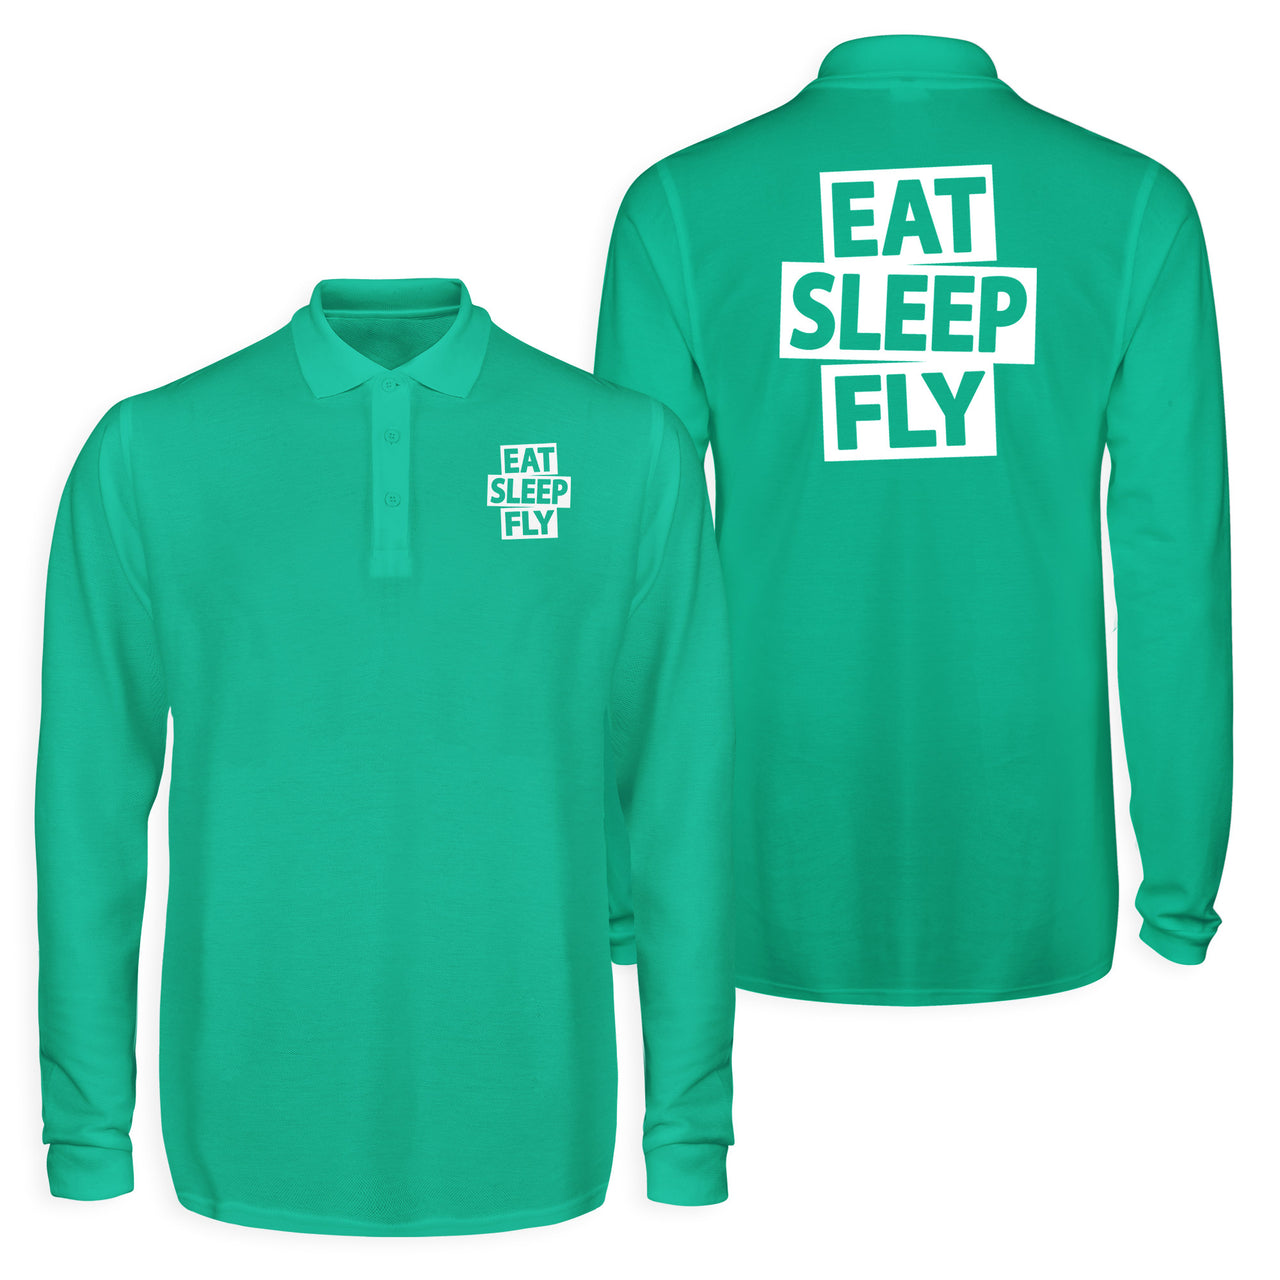 Eat Sleep Fly Designed Long Sleeve Polo T-Shirts (Double-Side)